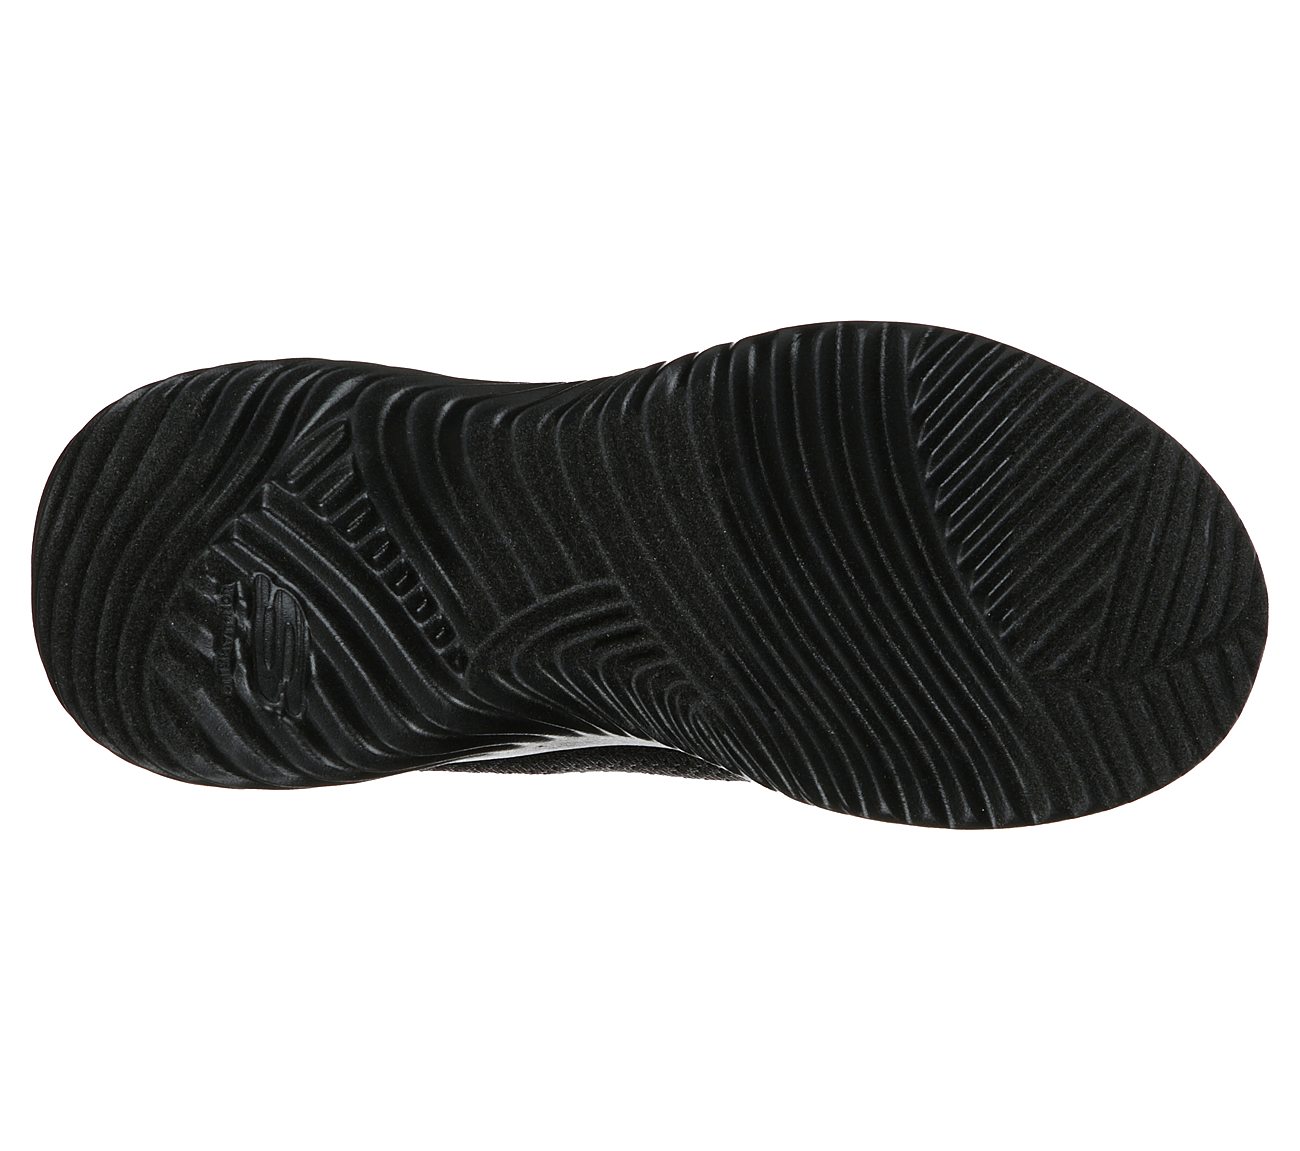 BOUNDER - ZALLOW, BBLACK Footwear Bottom View